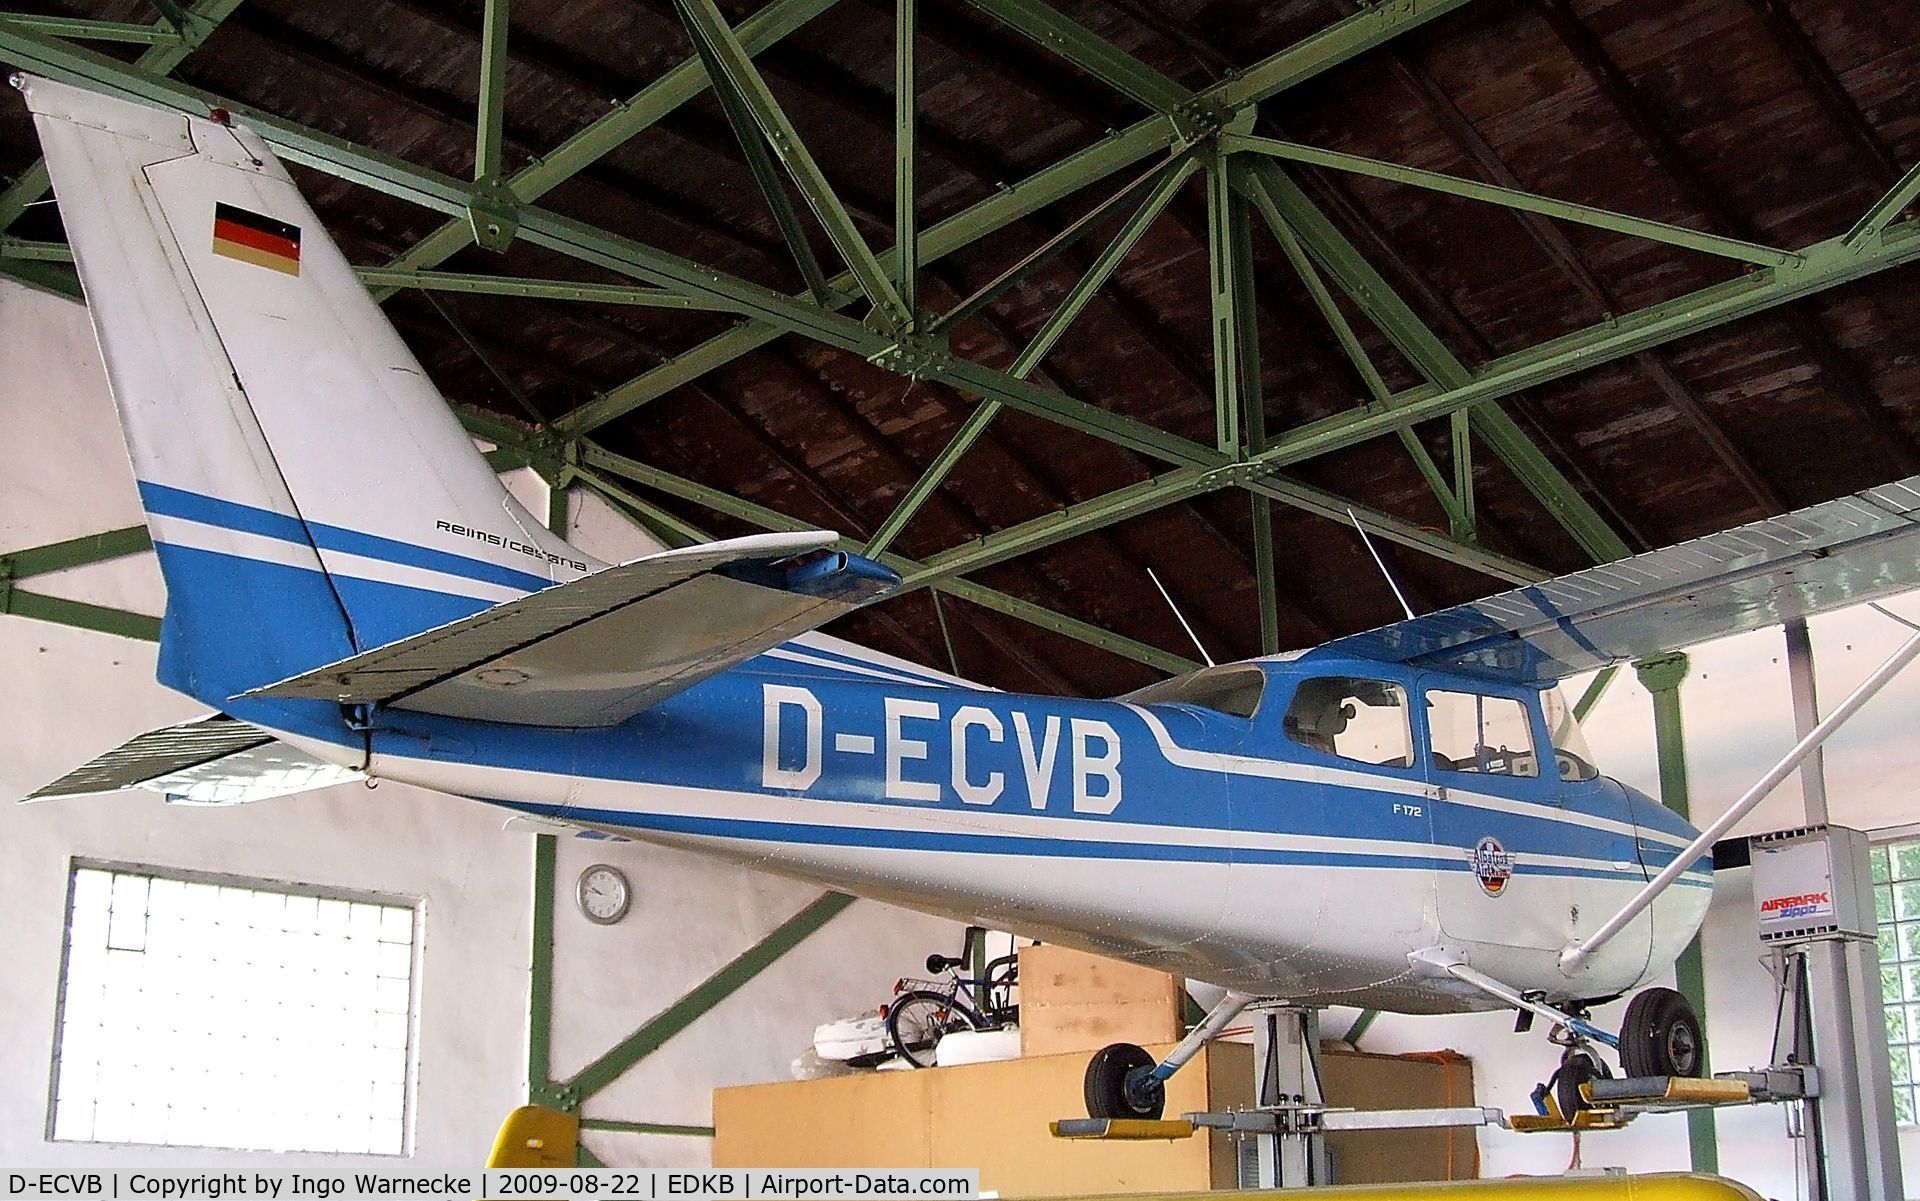 D-ECVB, Reims F172M Skyhawk Skyhawk C/N 0937, Cessna (Reims) F172M in hangar during the Bonn-Hangelar centennial jubilee airshow